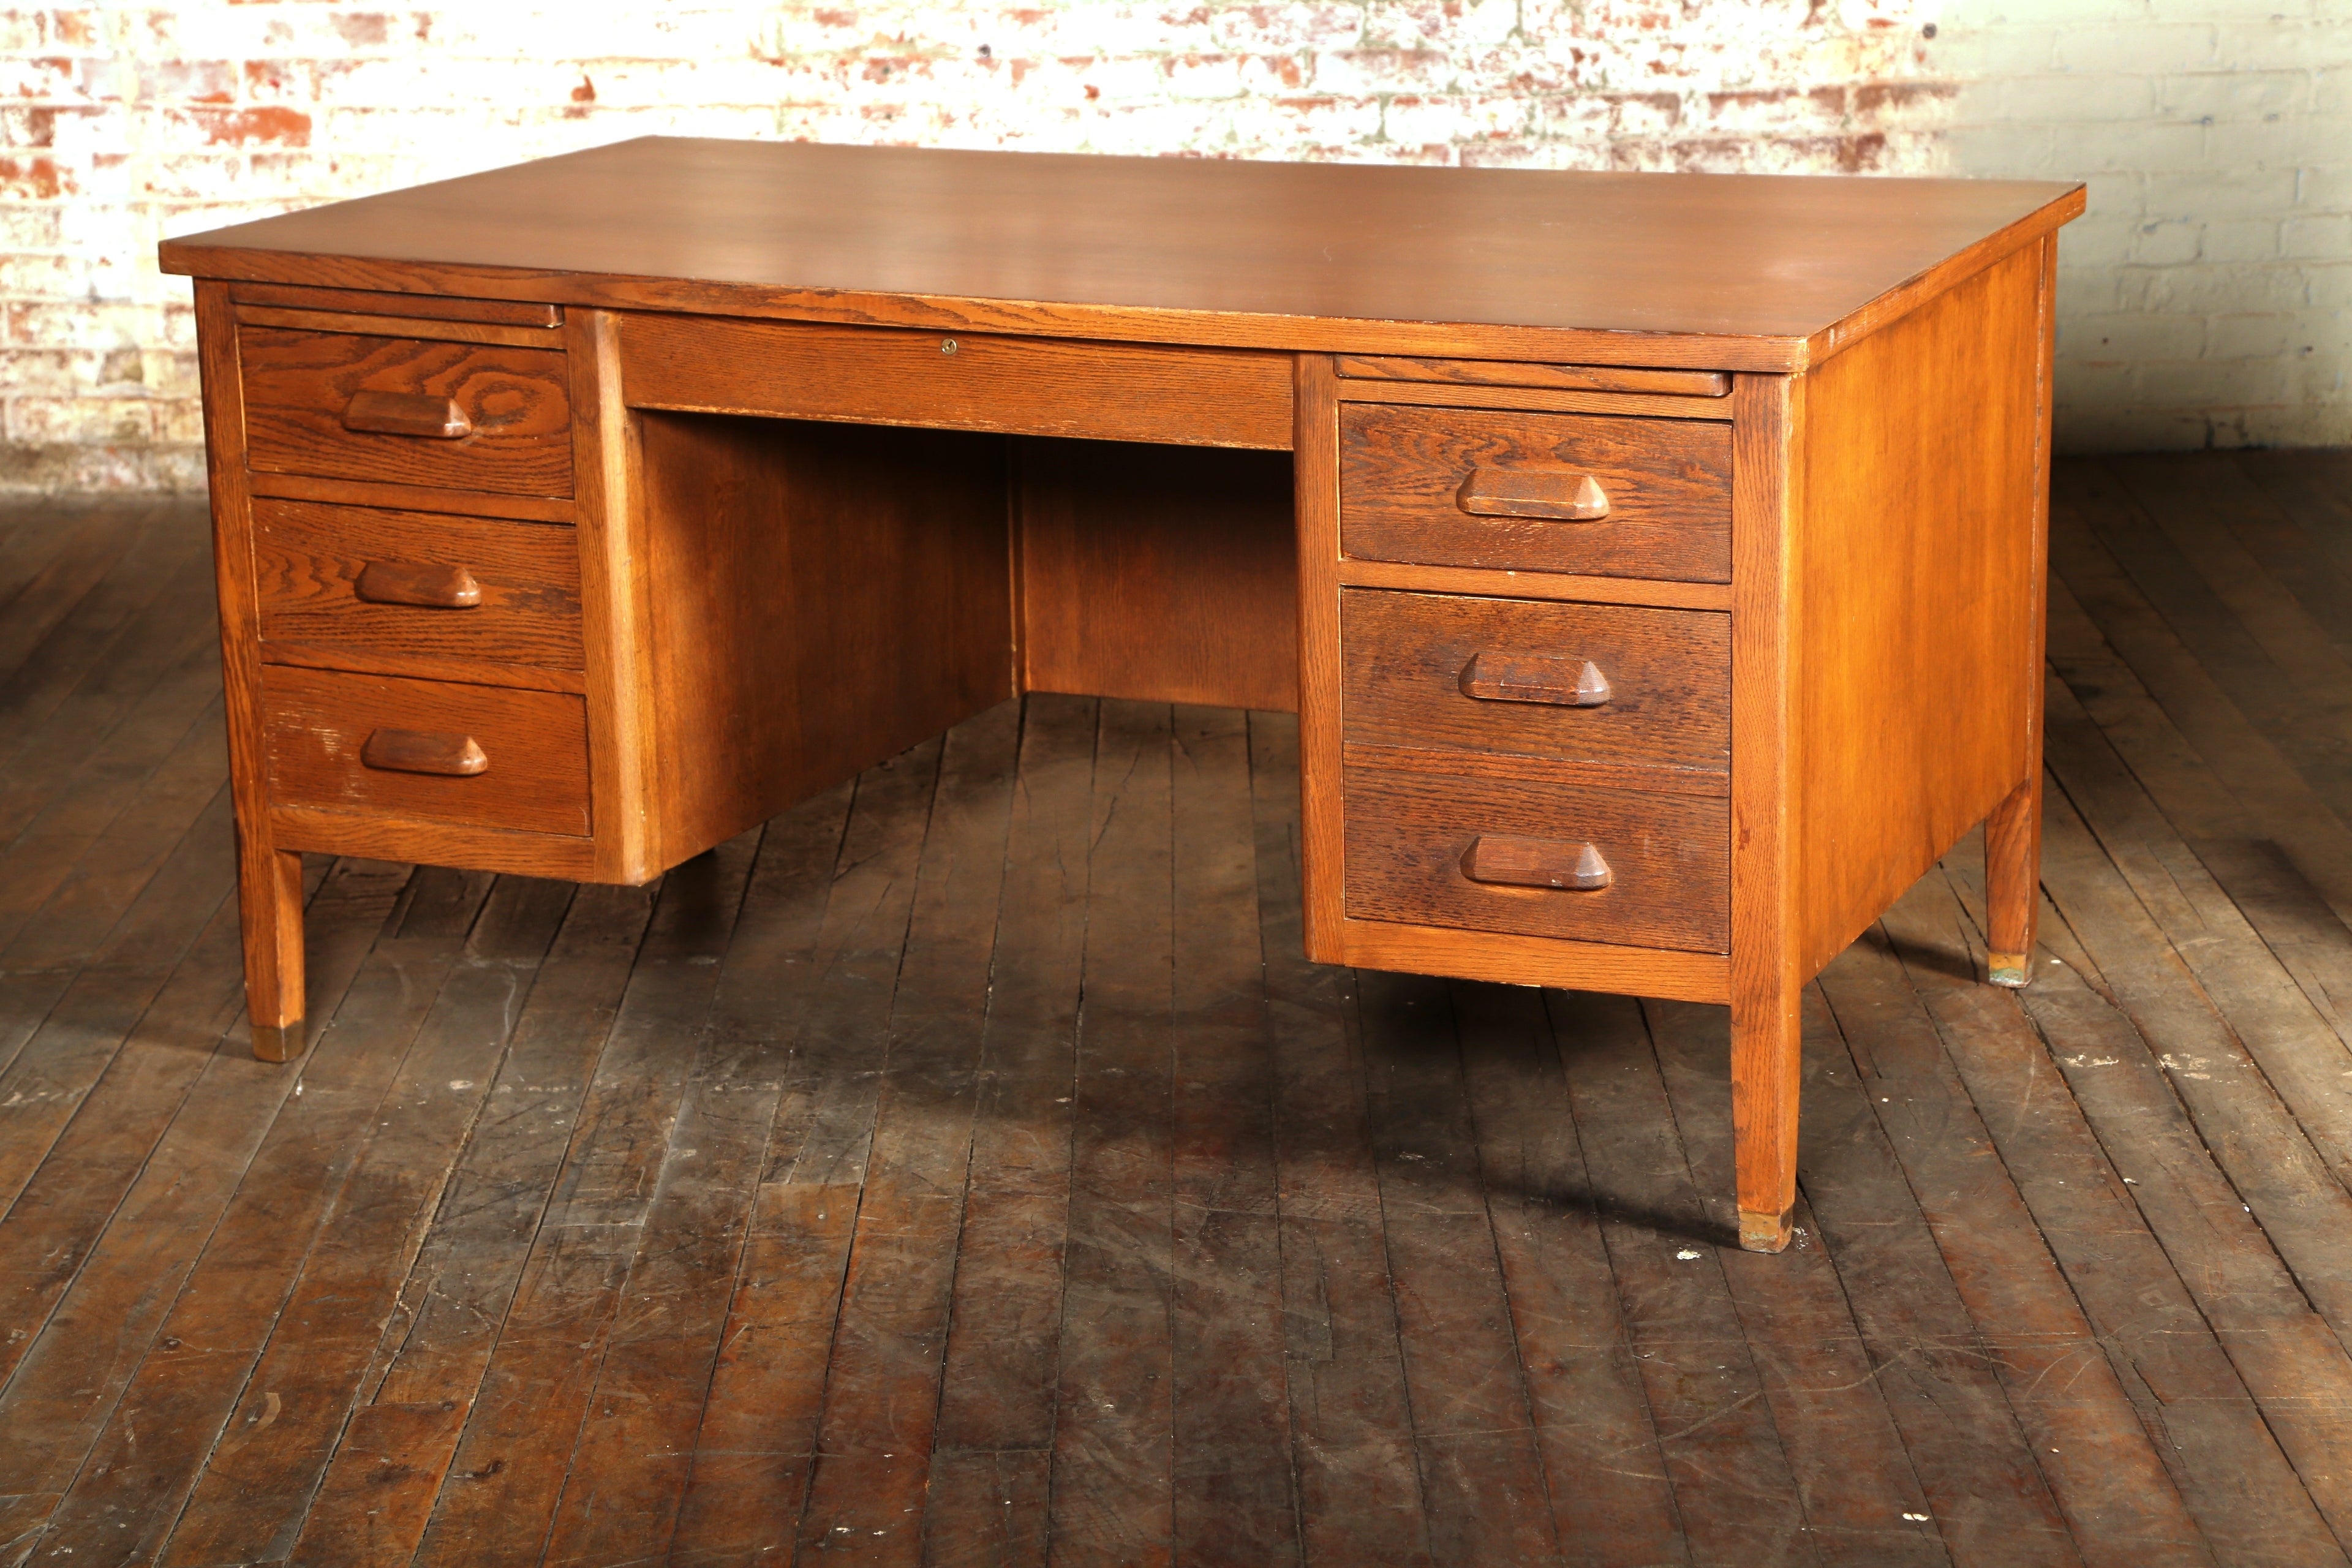 Vintage Industrial, Teachers Desk by "Standard Furniture Company" 